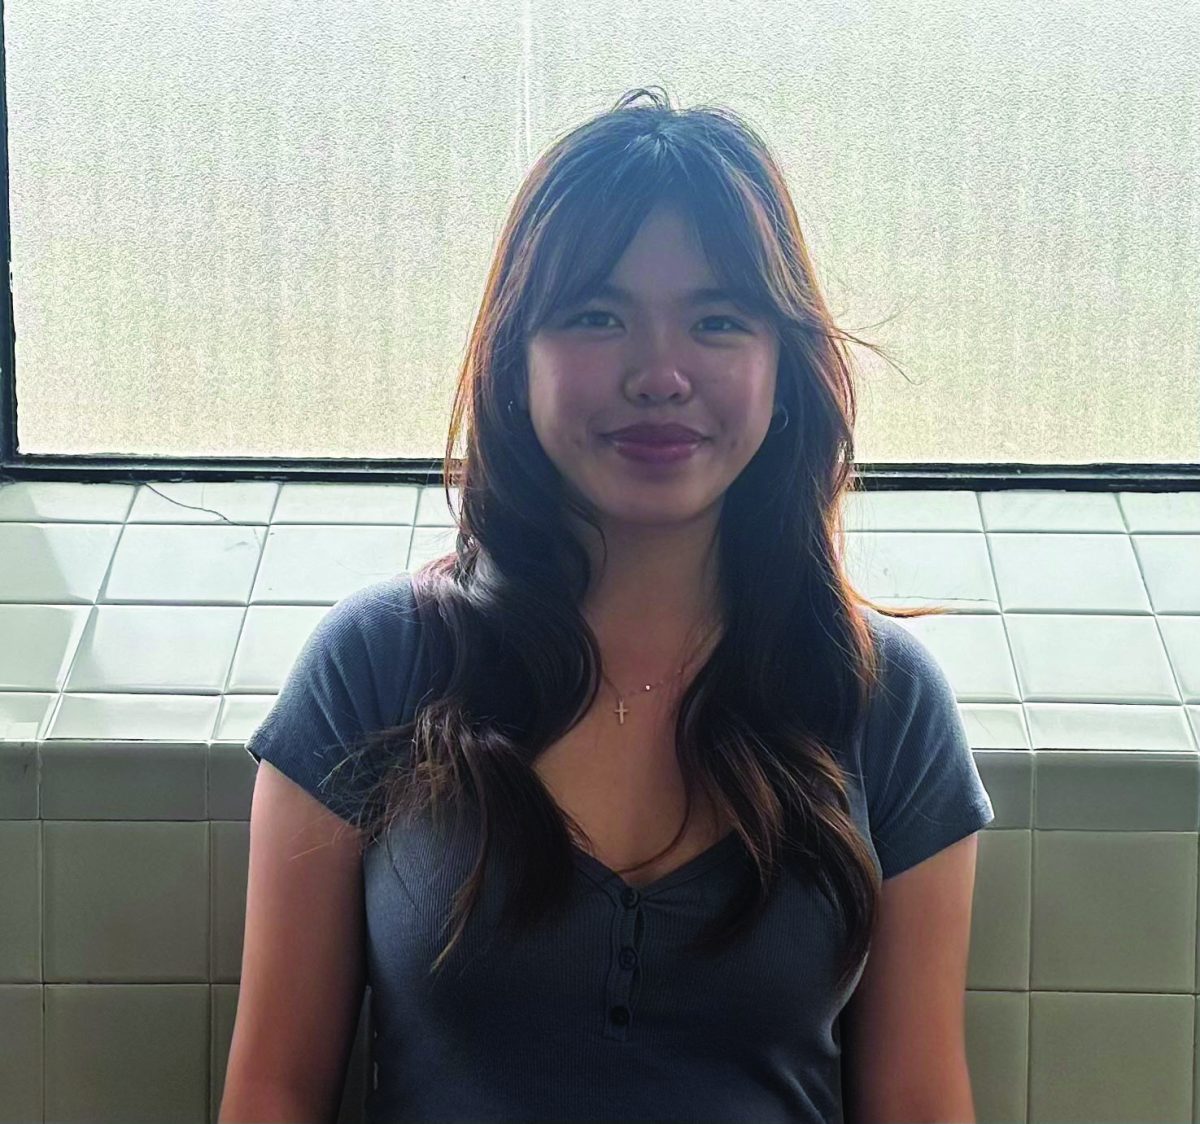 Naomi Lin 24, Editor-in-Chief